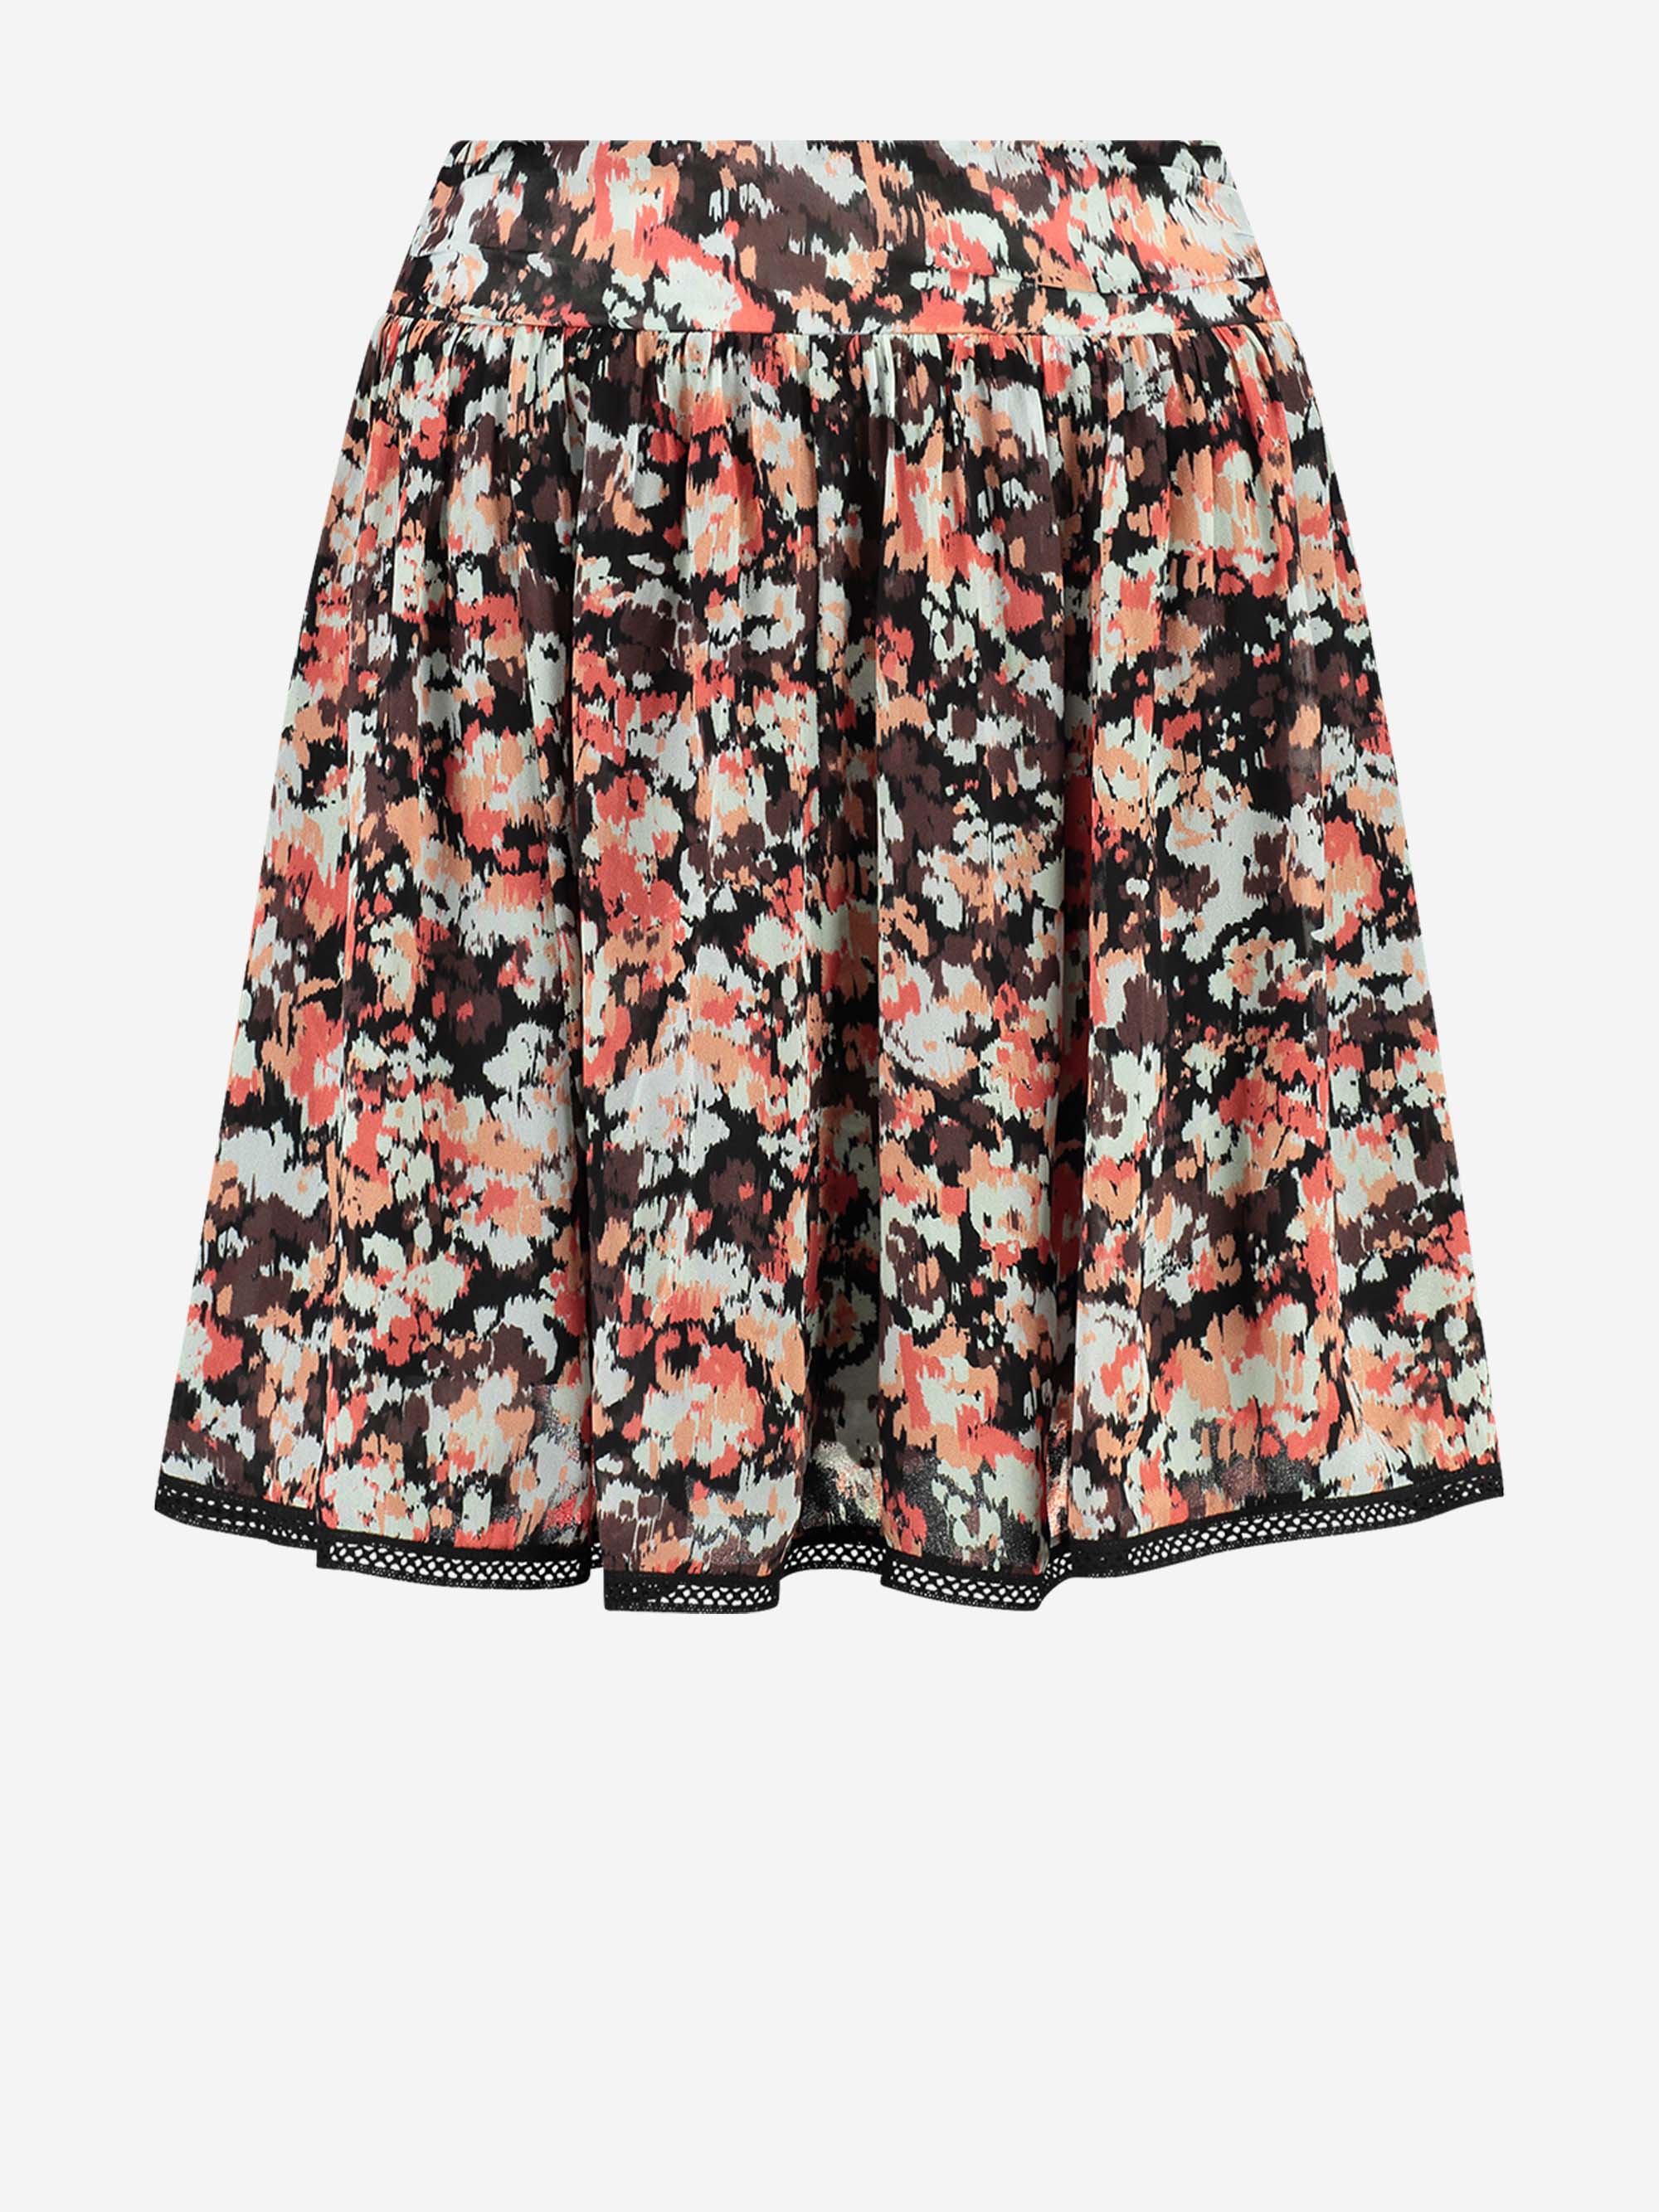 Flower printed skirt with elastic waistband